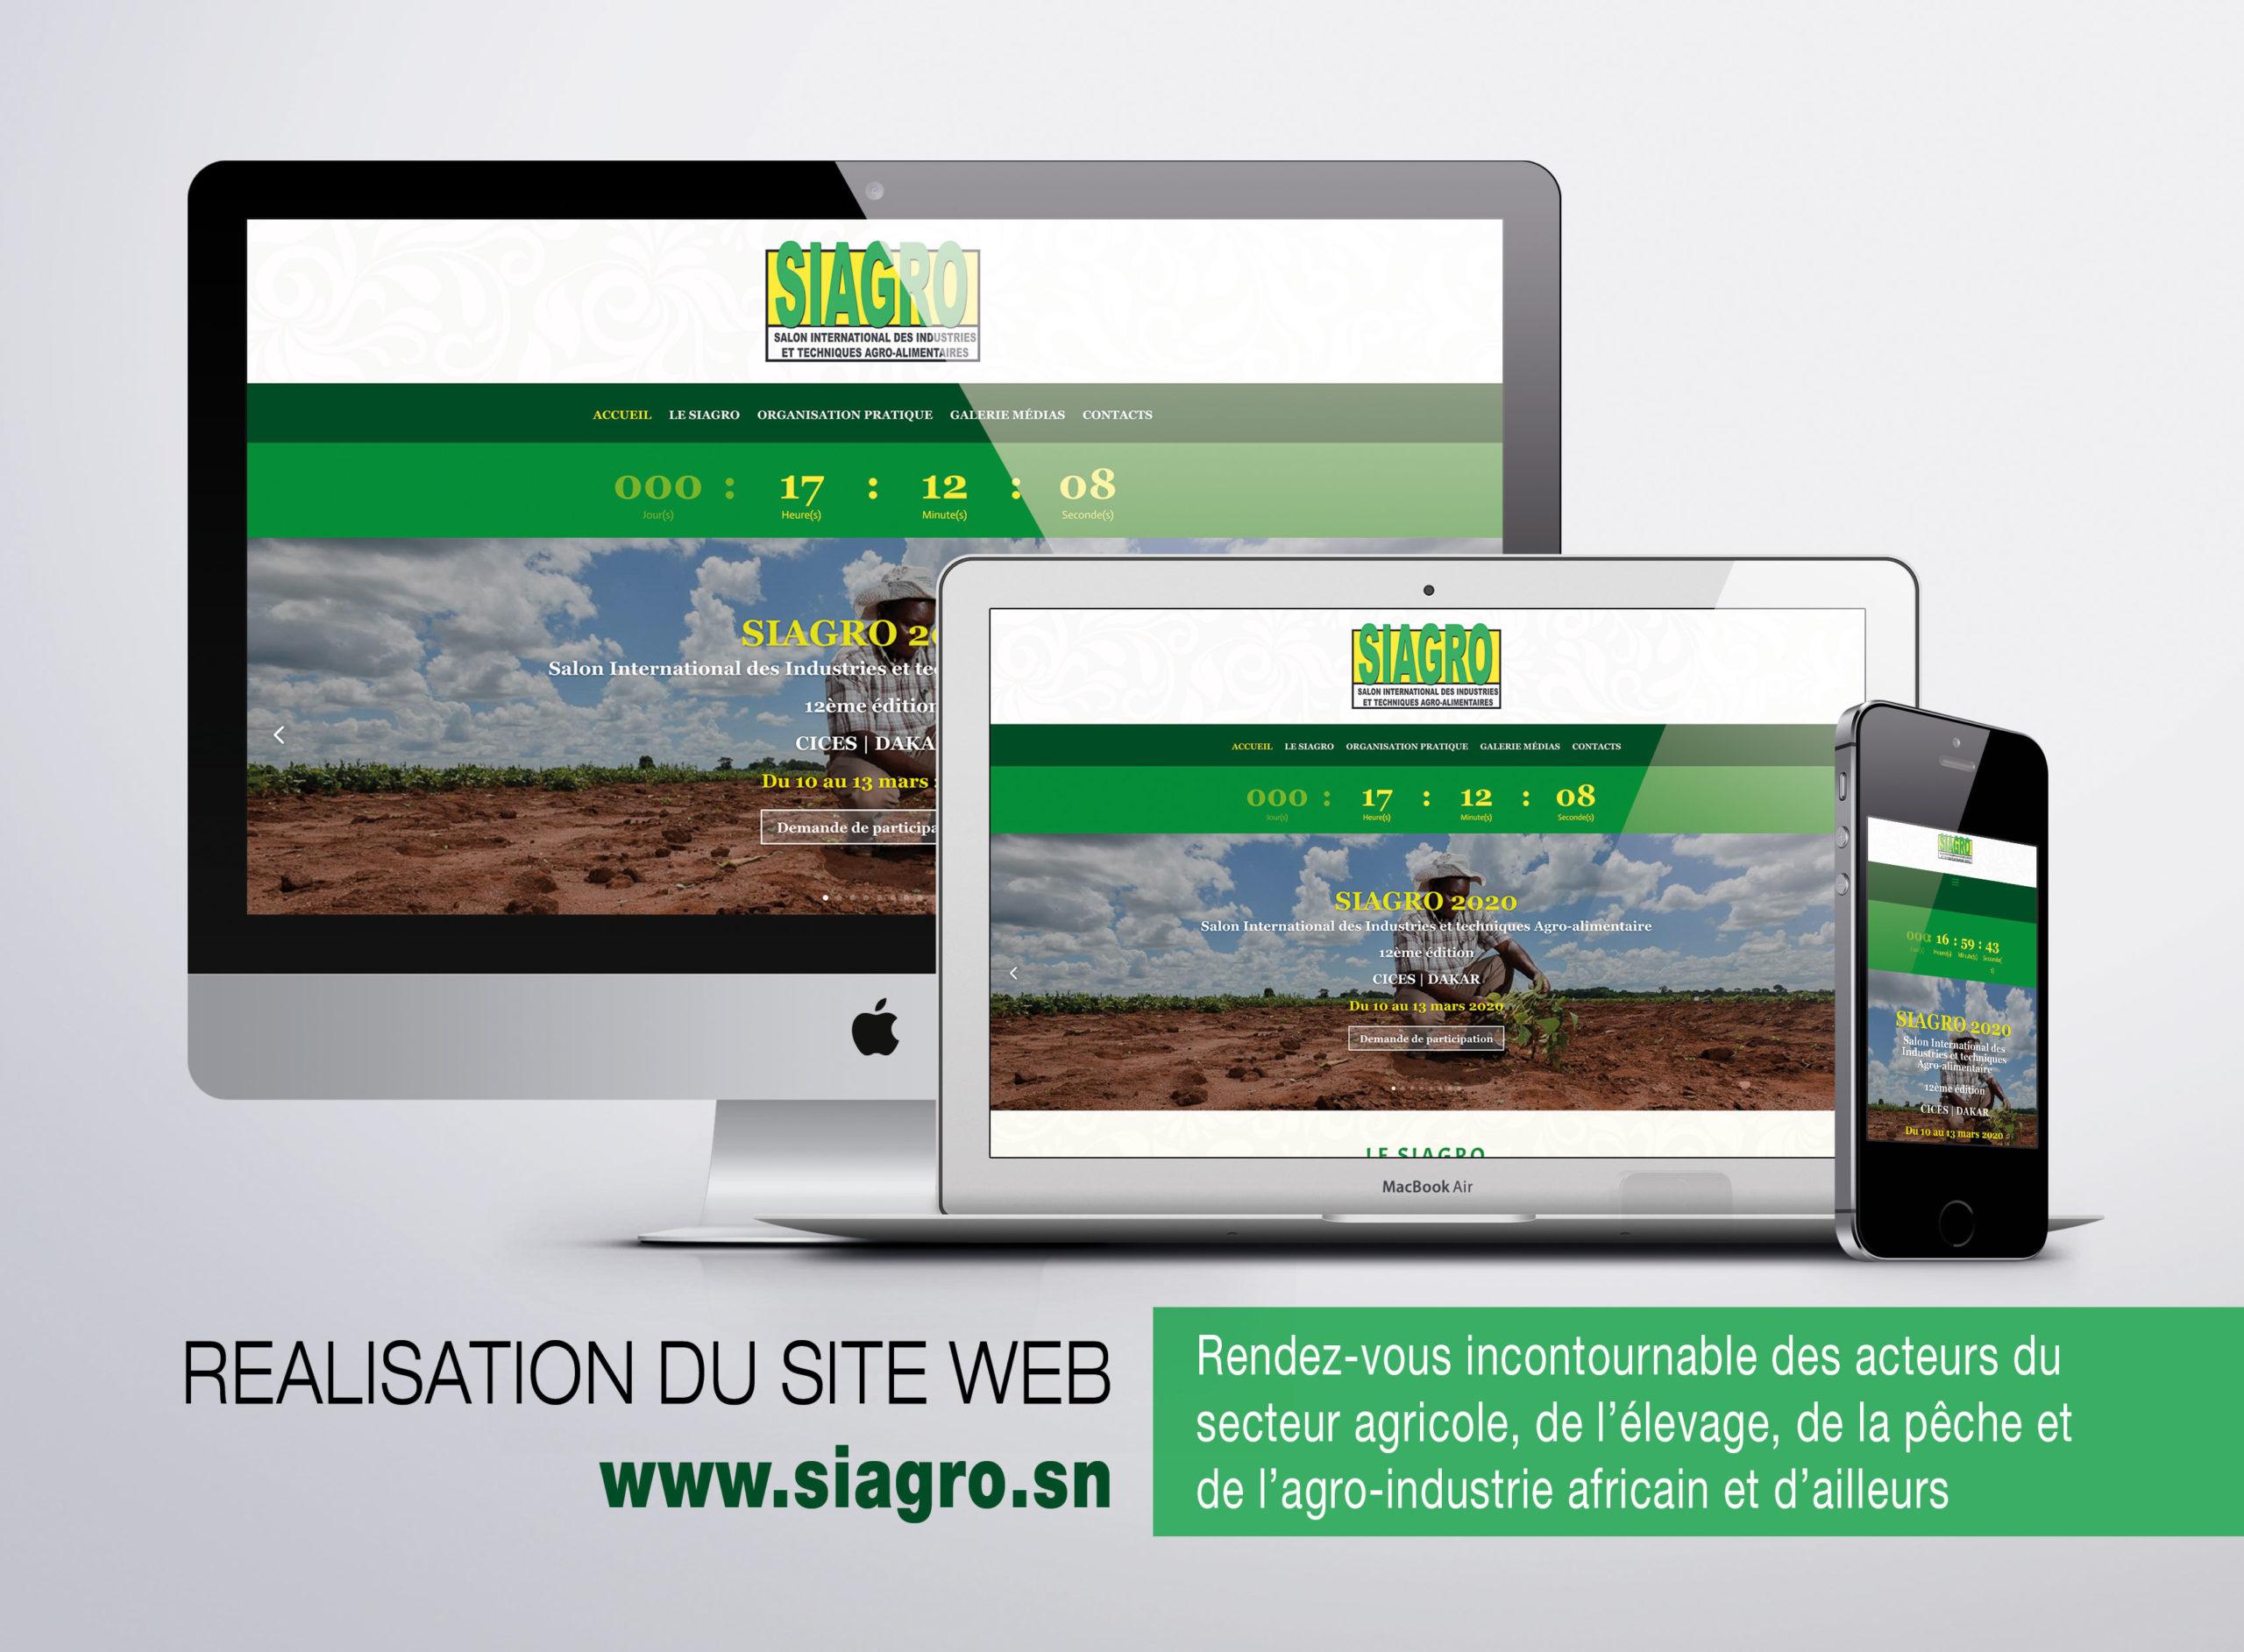 Site web www.siagro.sn| Design by Lordibra |